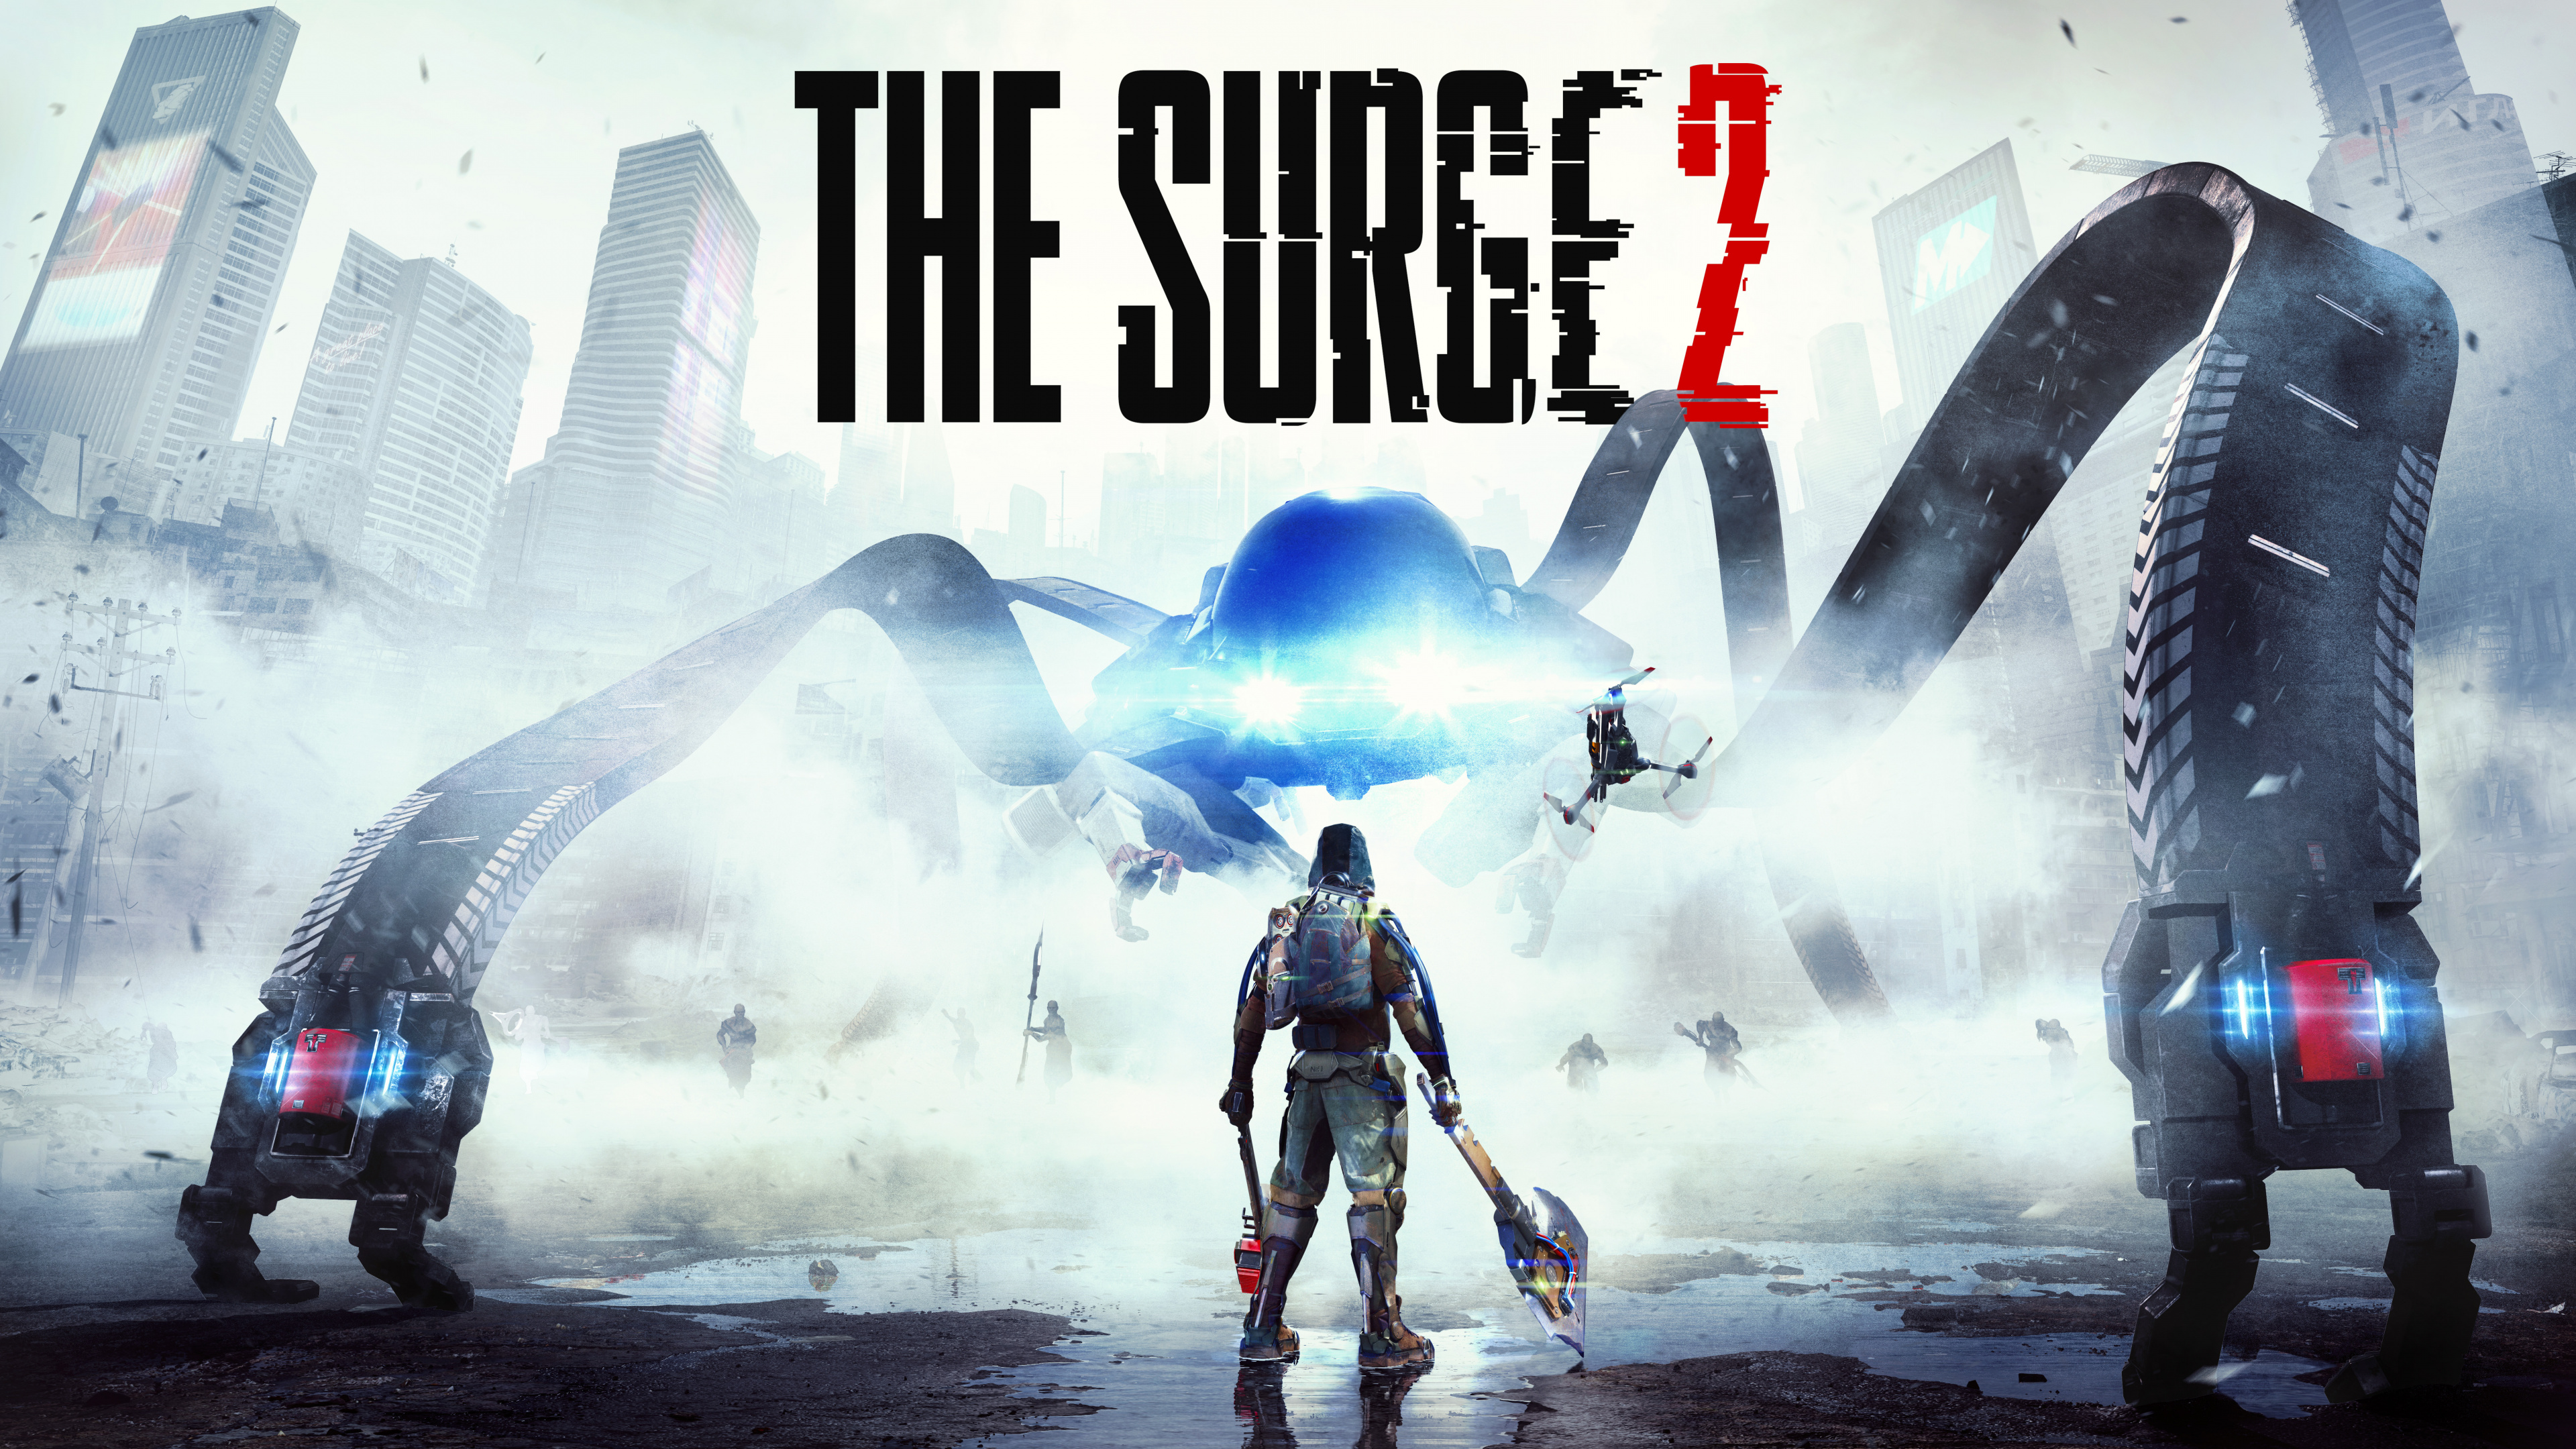 Le Surge 2, Surtension, Pont 13, Focus Accueil Interactif, Playstation 4. Wallpaper in 3840x2160 Resolution